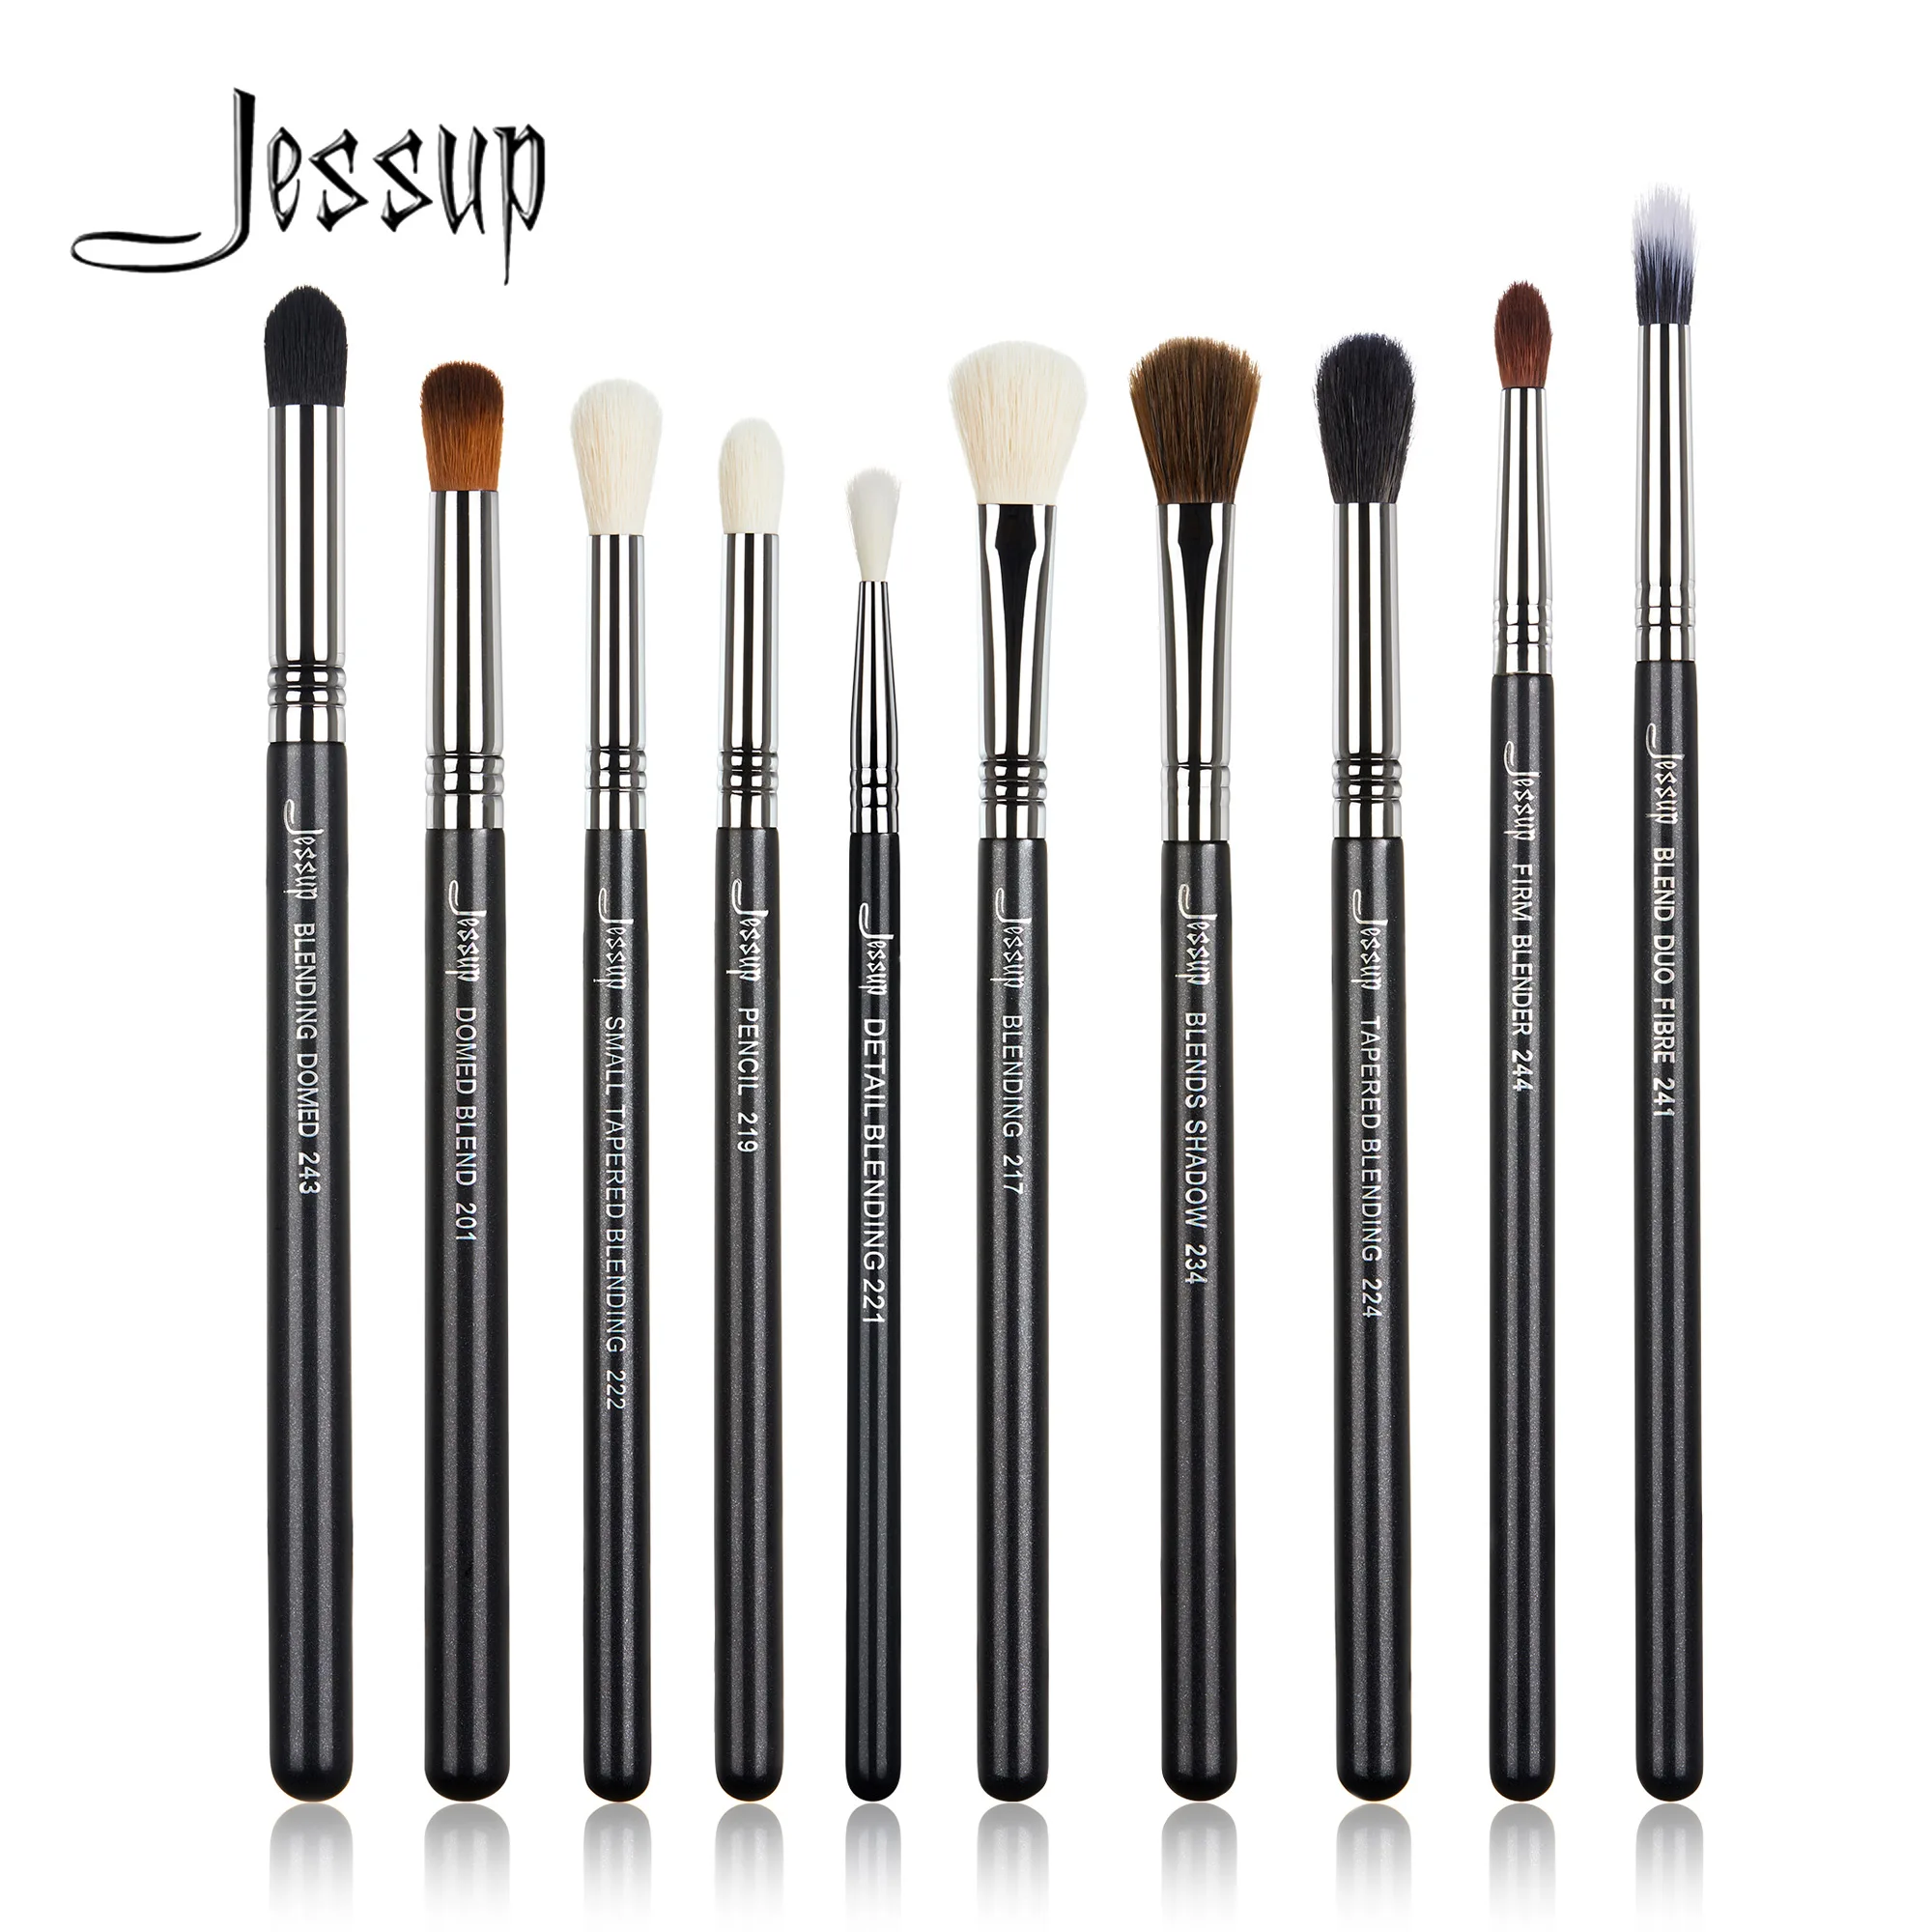 Jessup Eye Blending Brush Makeup Crease Shadow Brush Eye Details Premium  Tapered Fluffy Domed Blend Pencil Synthetic Hair Wooden